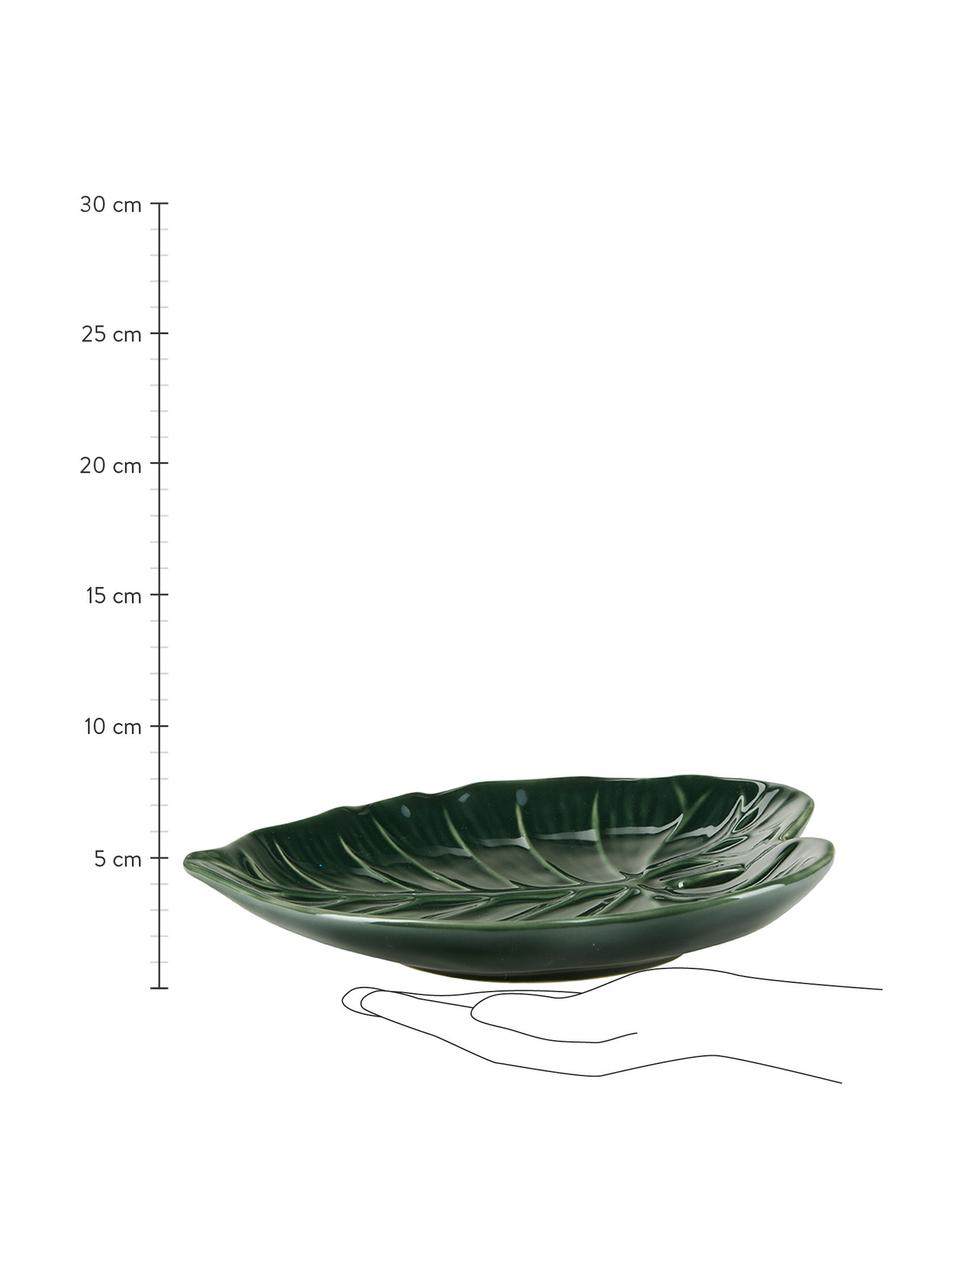 Porseleinen serveerschaal Leaf in groen, L 25 x B 20 cm, Porselein, Groen, L 25 x B 20 cm